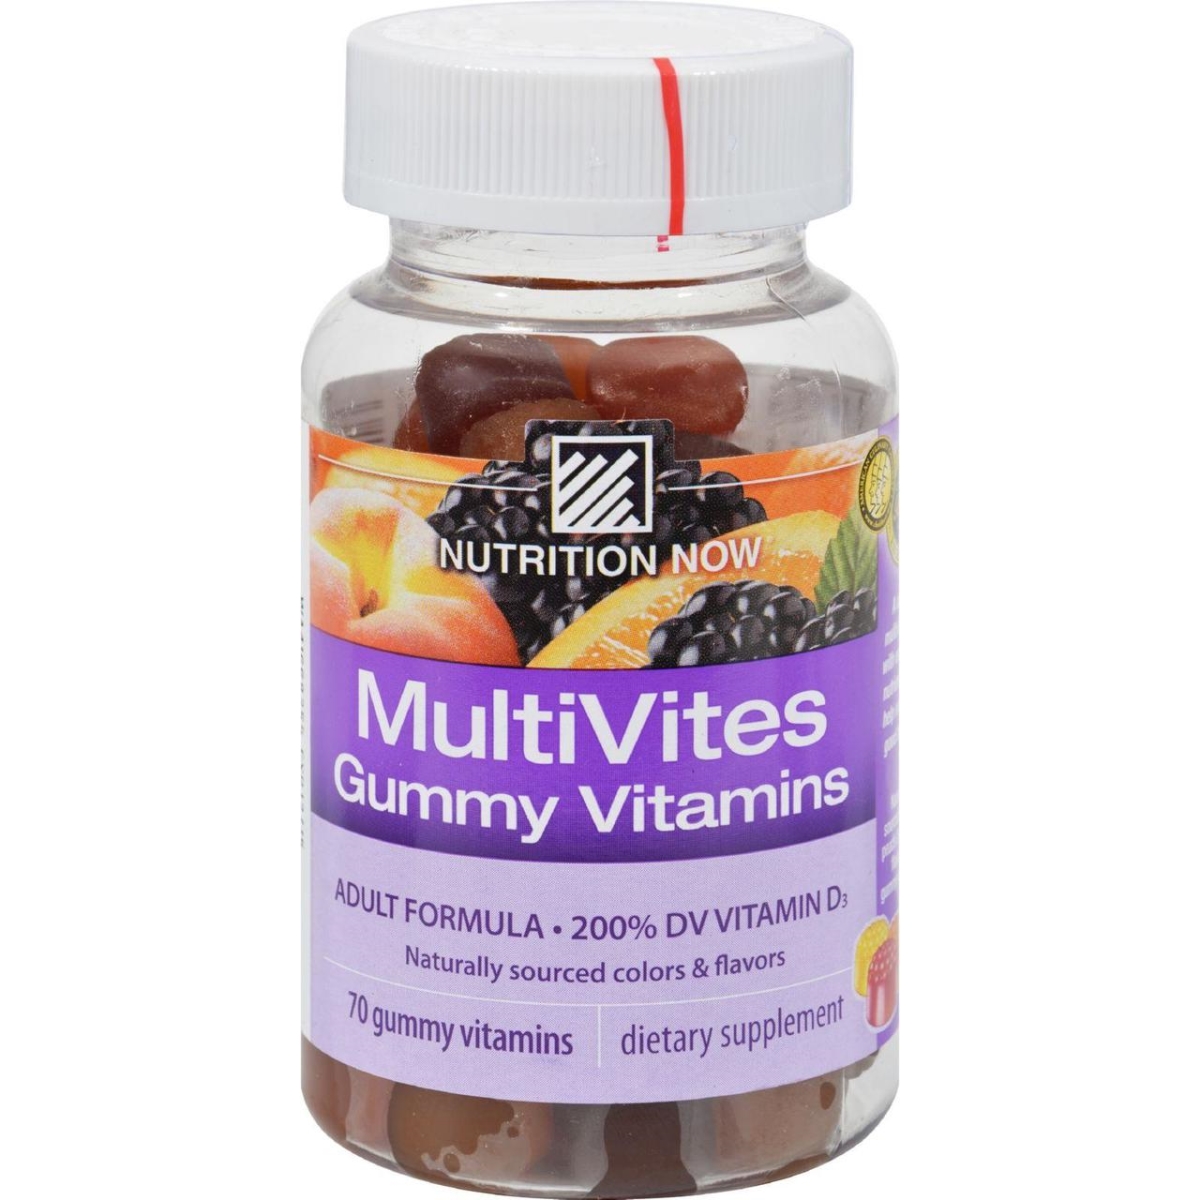 Hg0310805 Multi Vites Gummy Vitamins Fruit - 70 Gummies